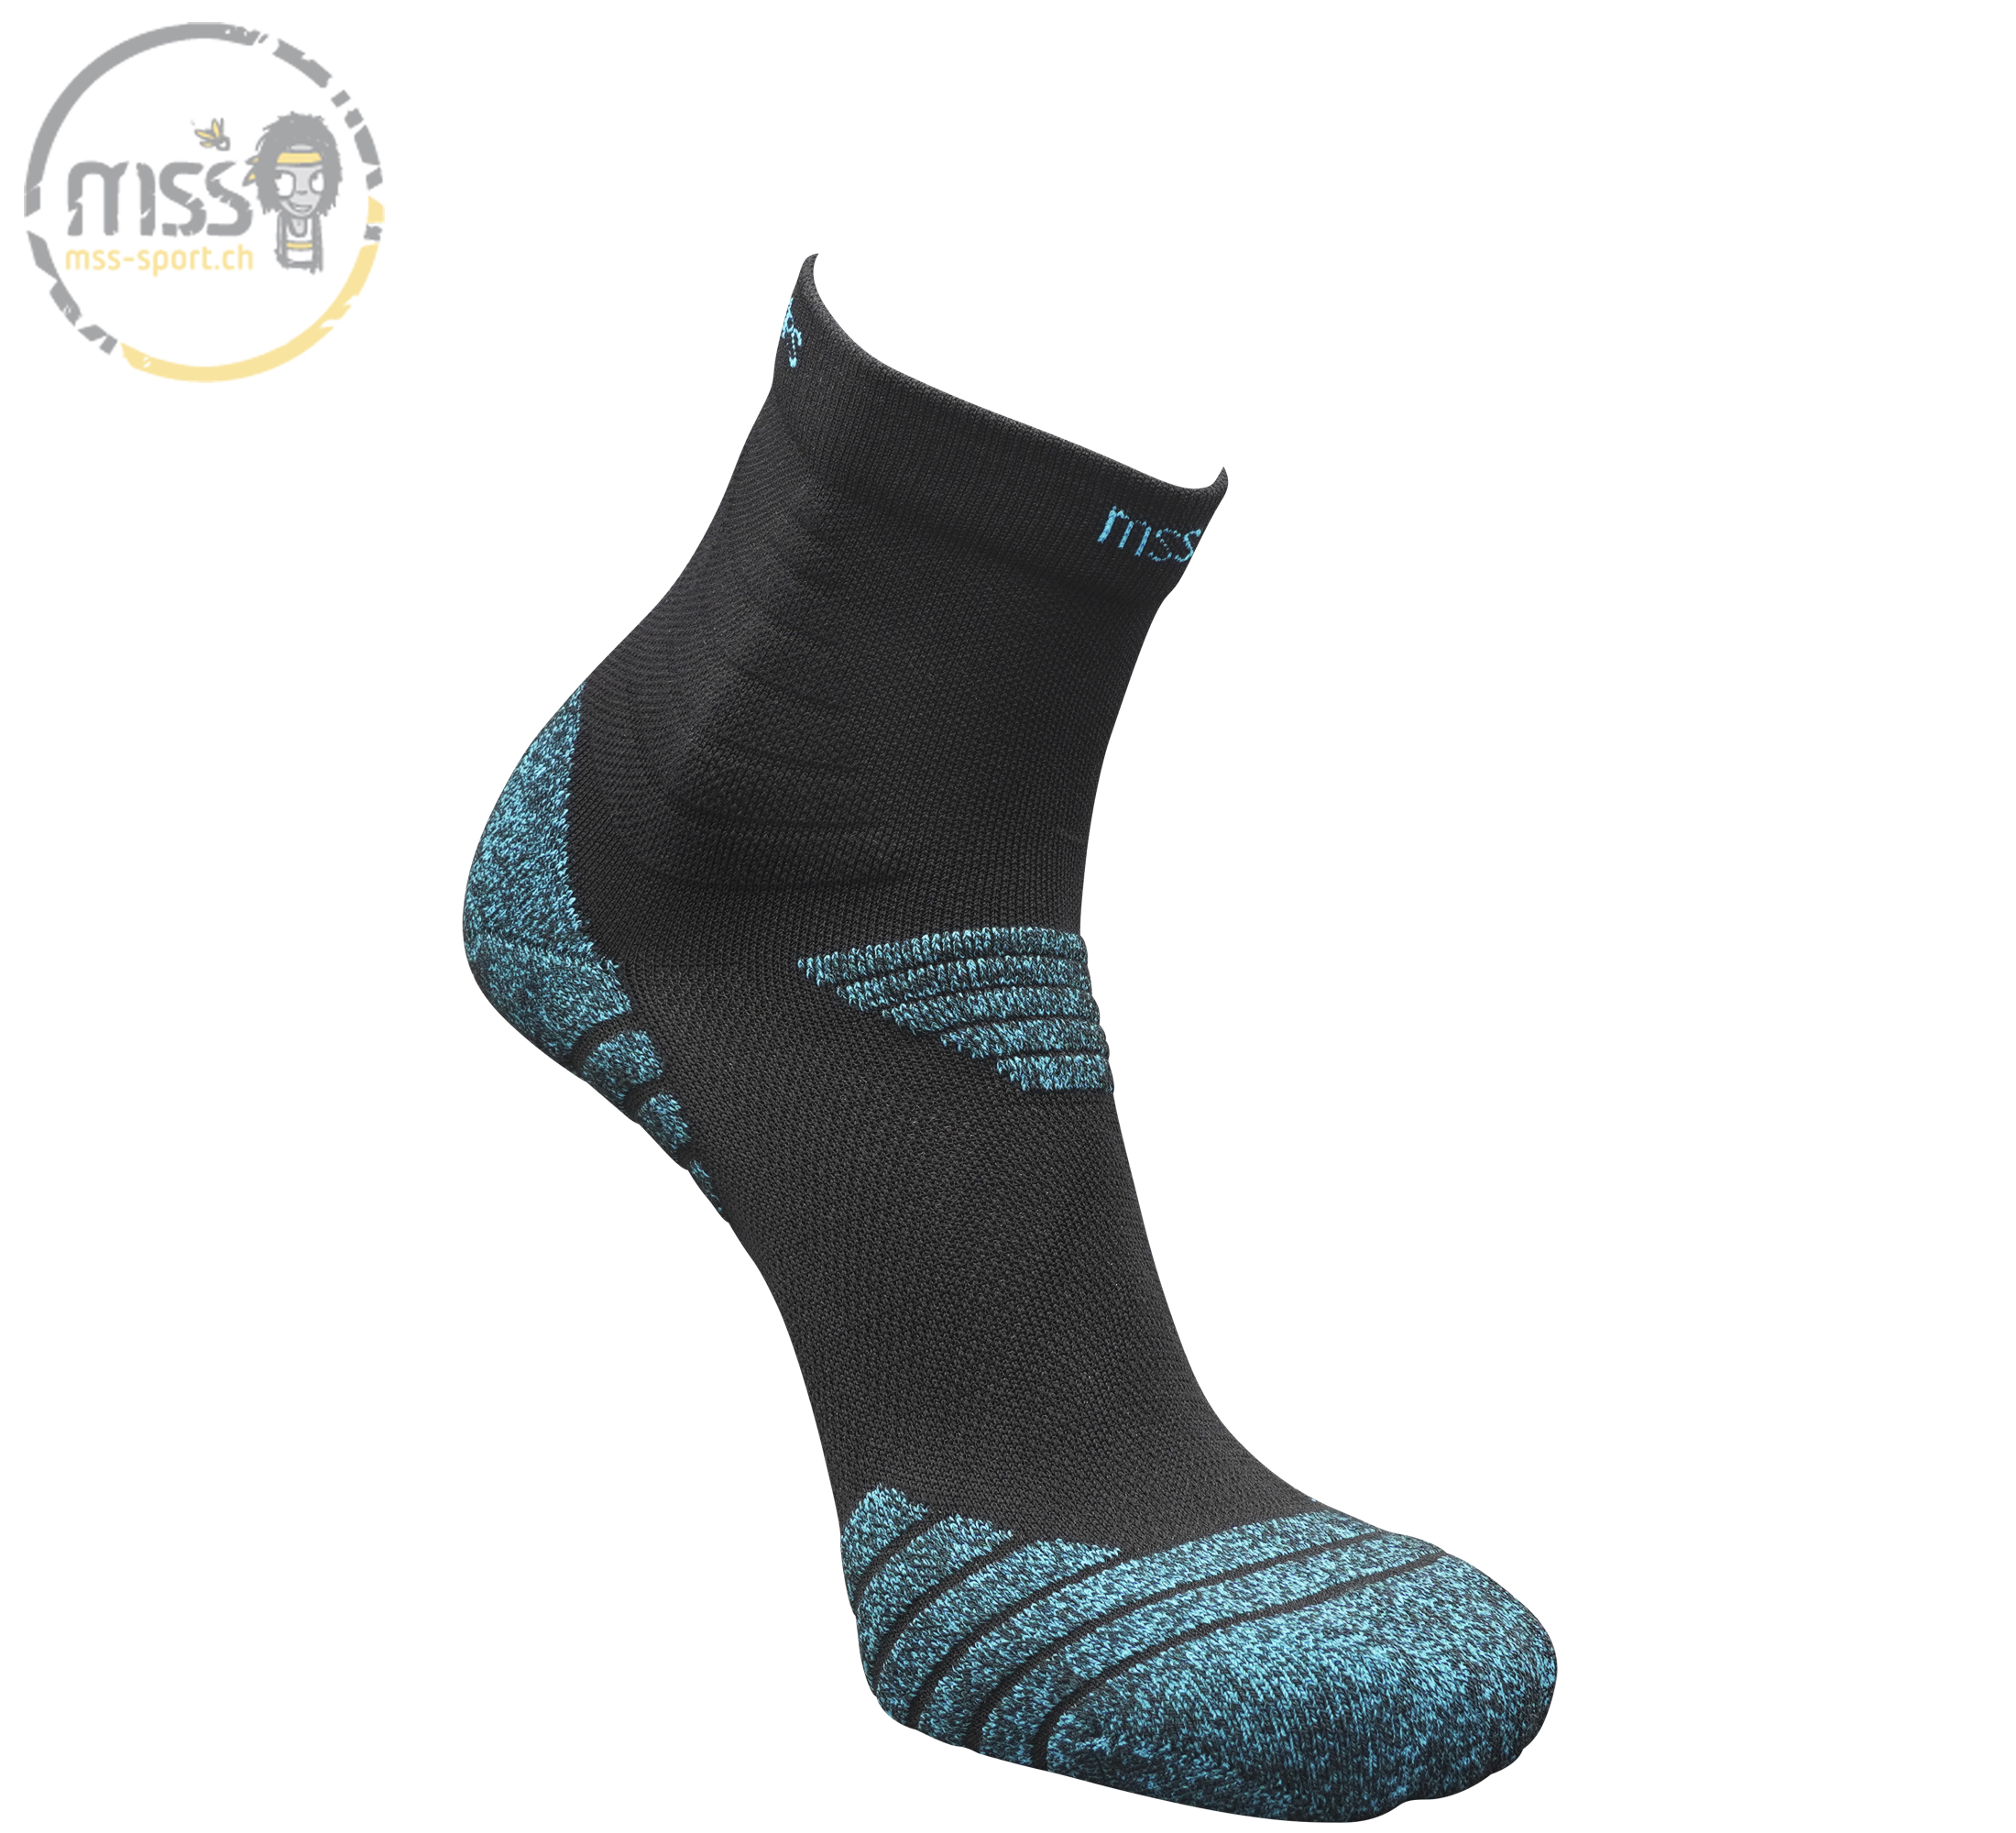 mss-socks GO 7500 mid Lady black blue